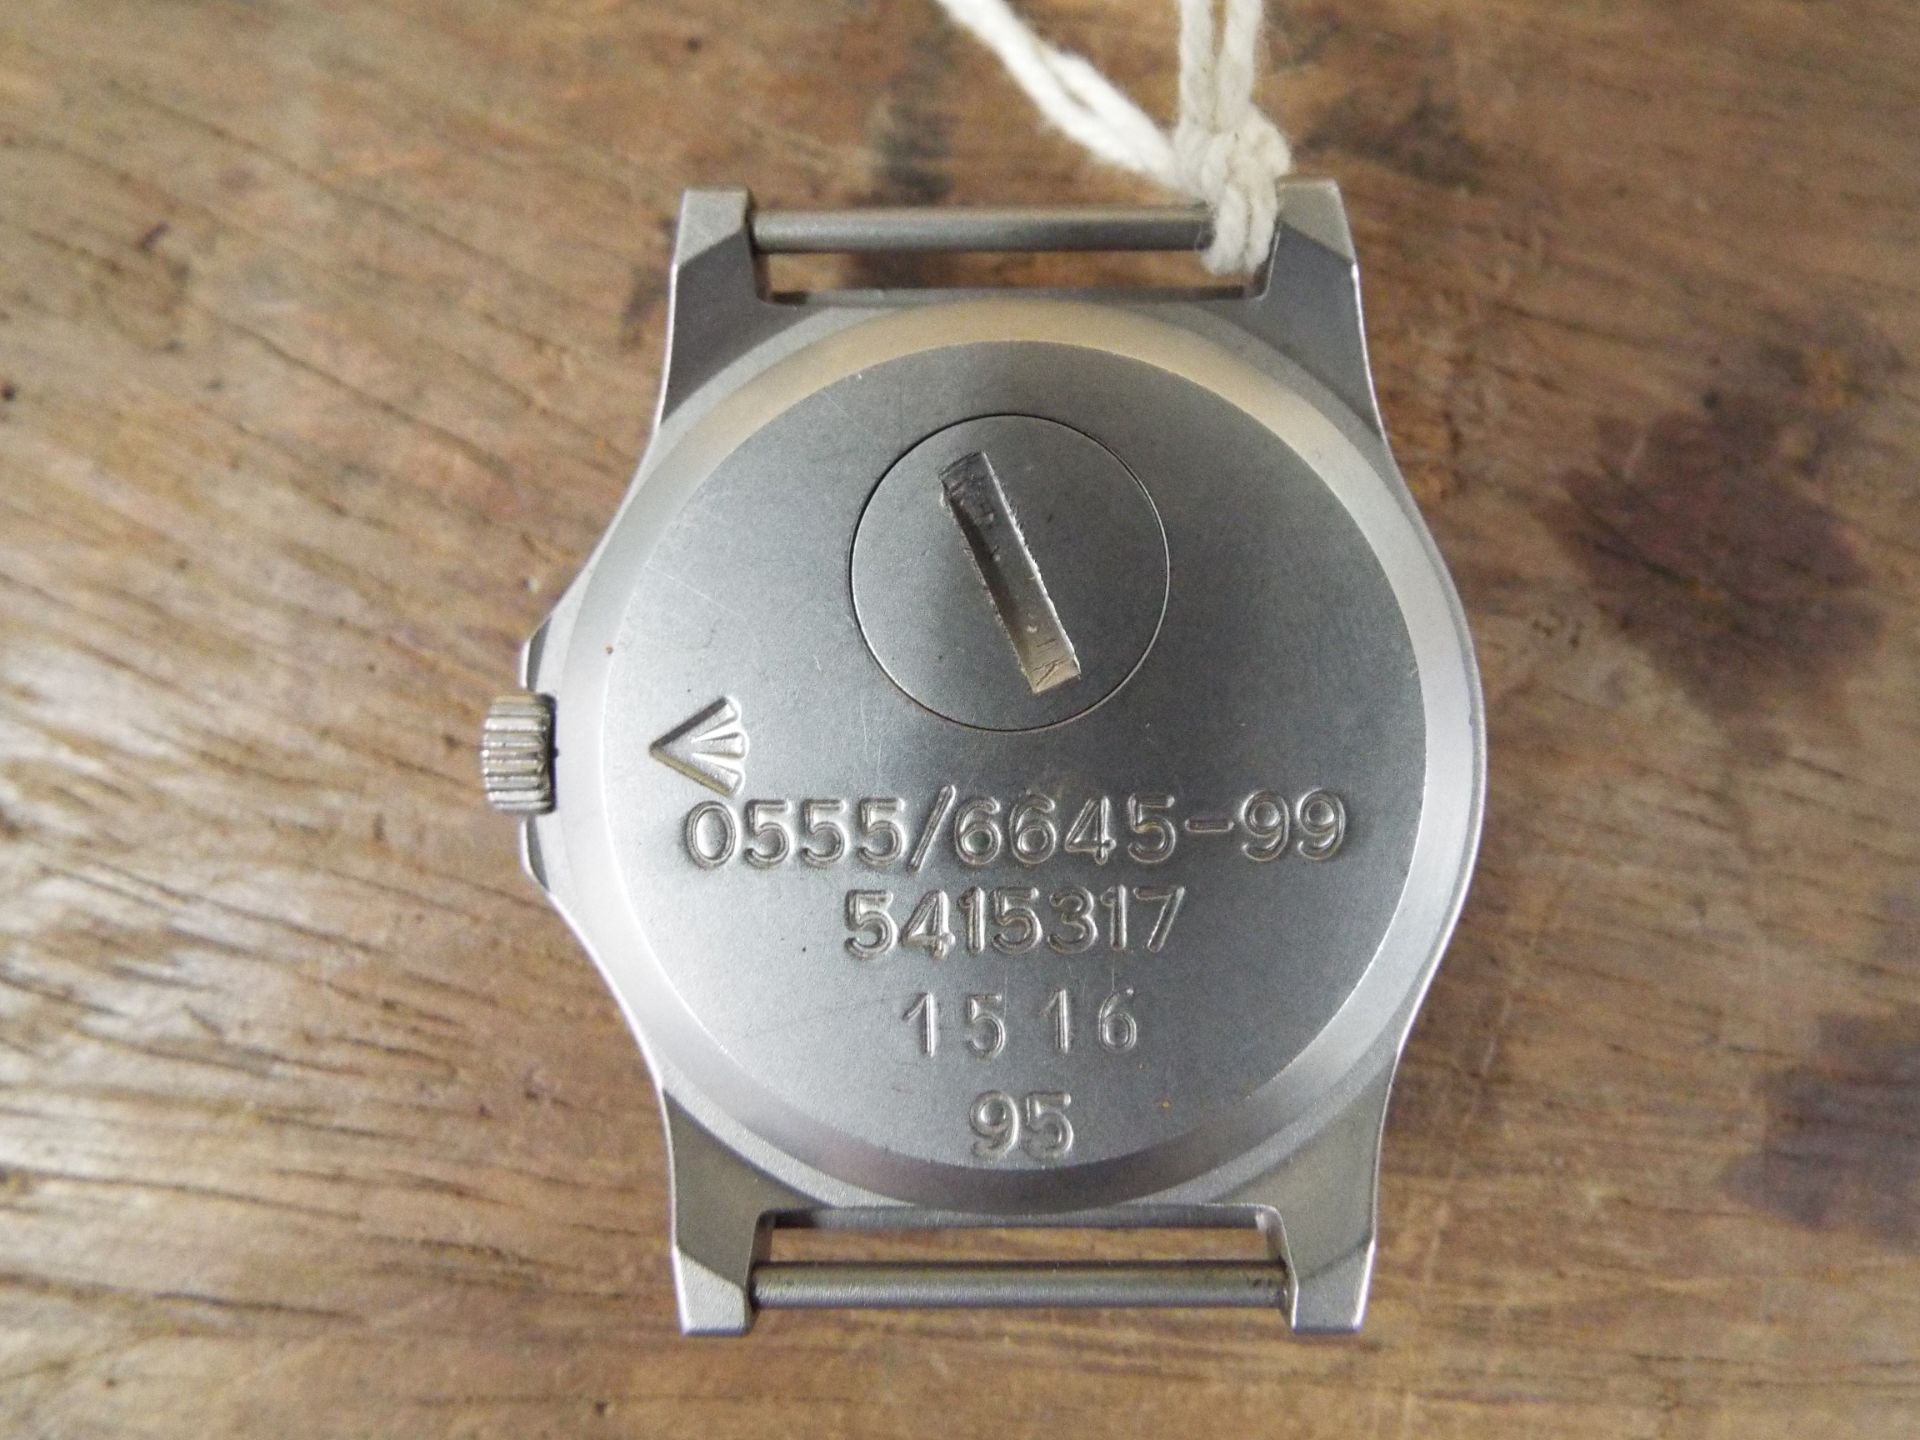 Genuine British Army,CWC quartz wrist watch - Image 4 of 4